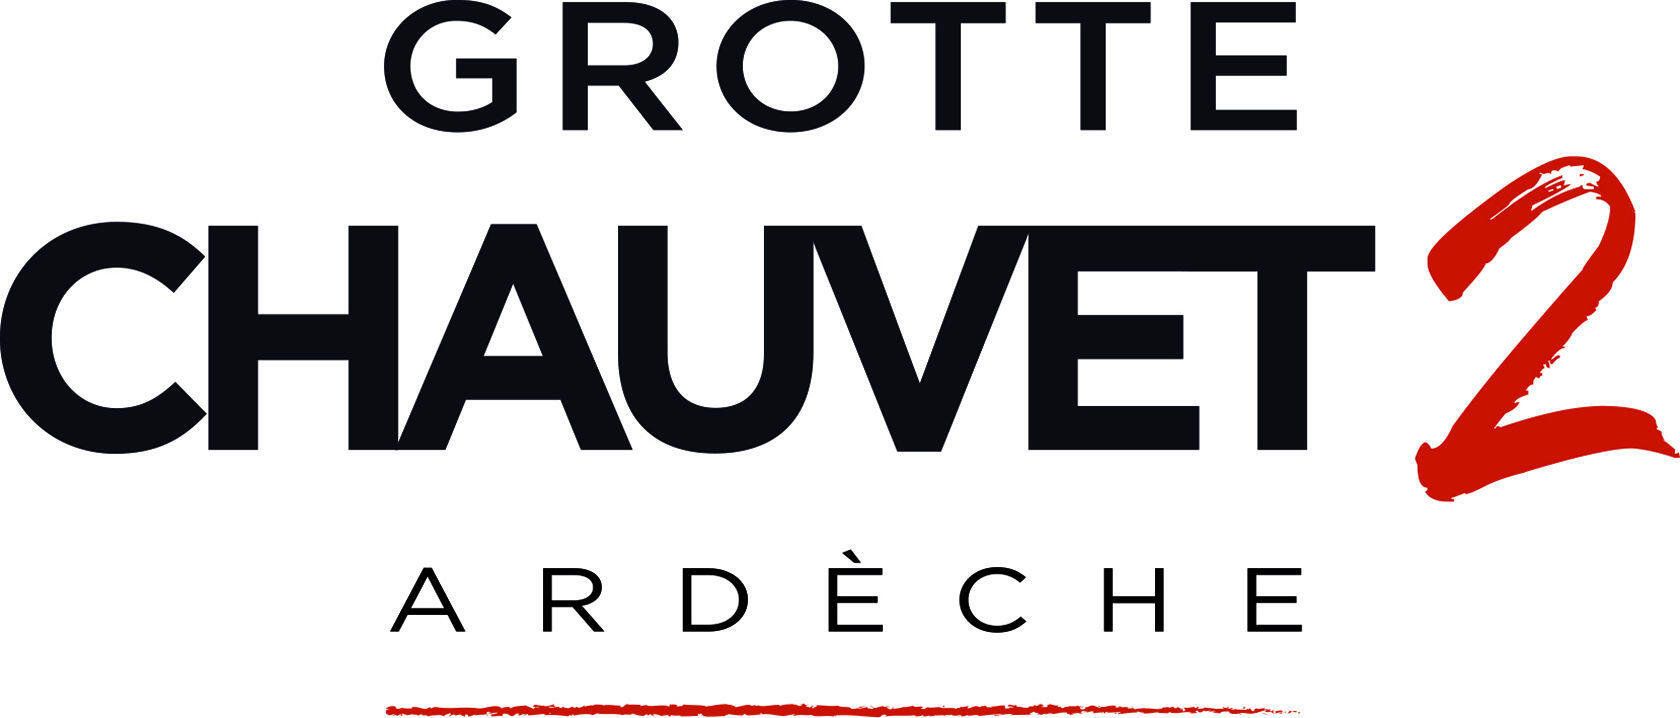 Grotte Chauvet 2 Logo